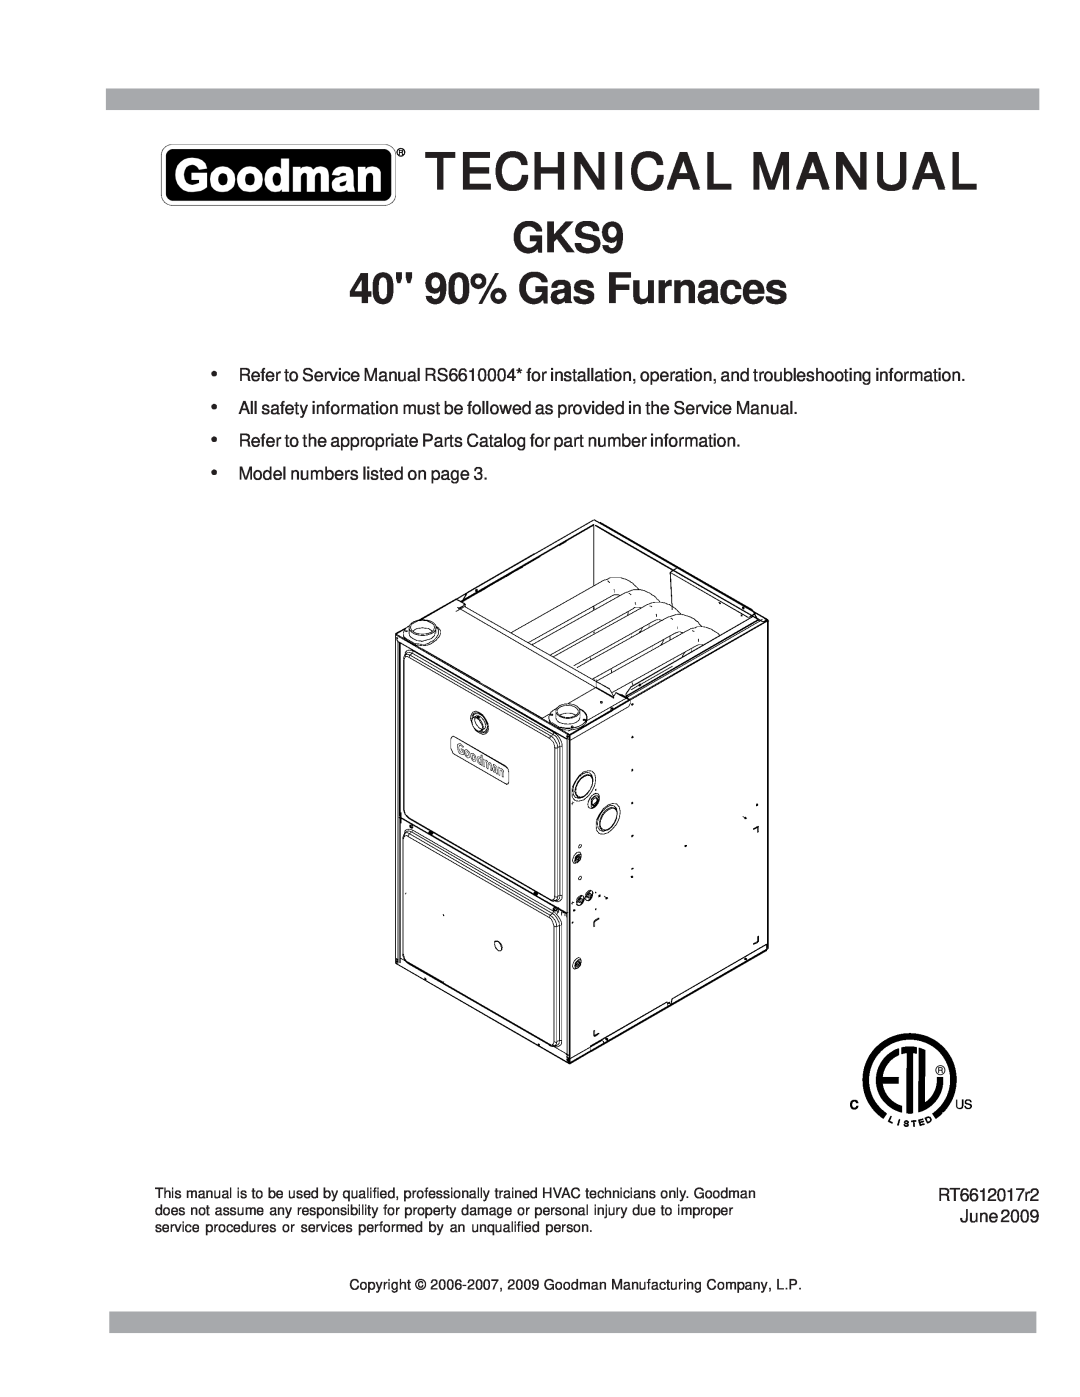 Goodman Mfg service manual GKS9 40 90% Gas Furnaces, Technical Manual 